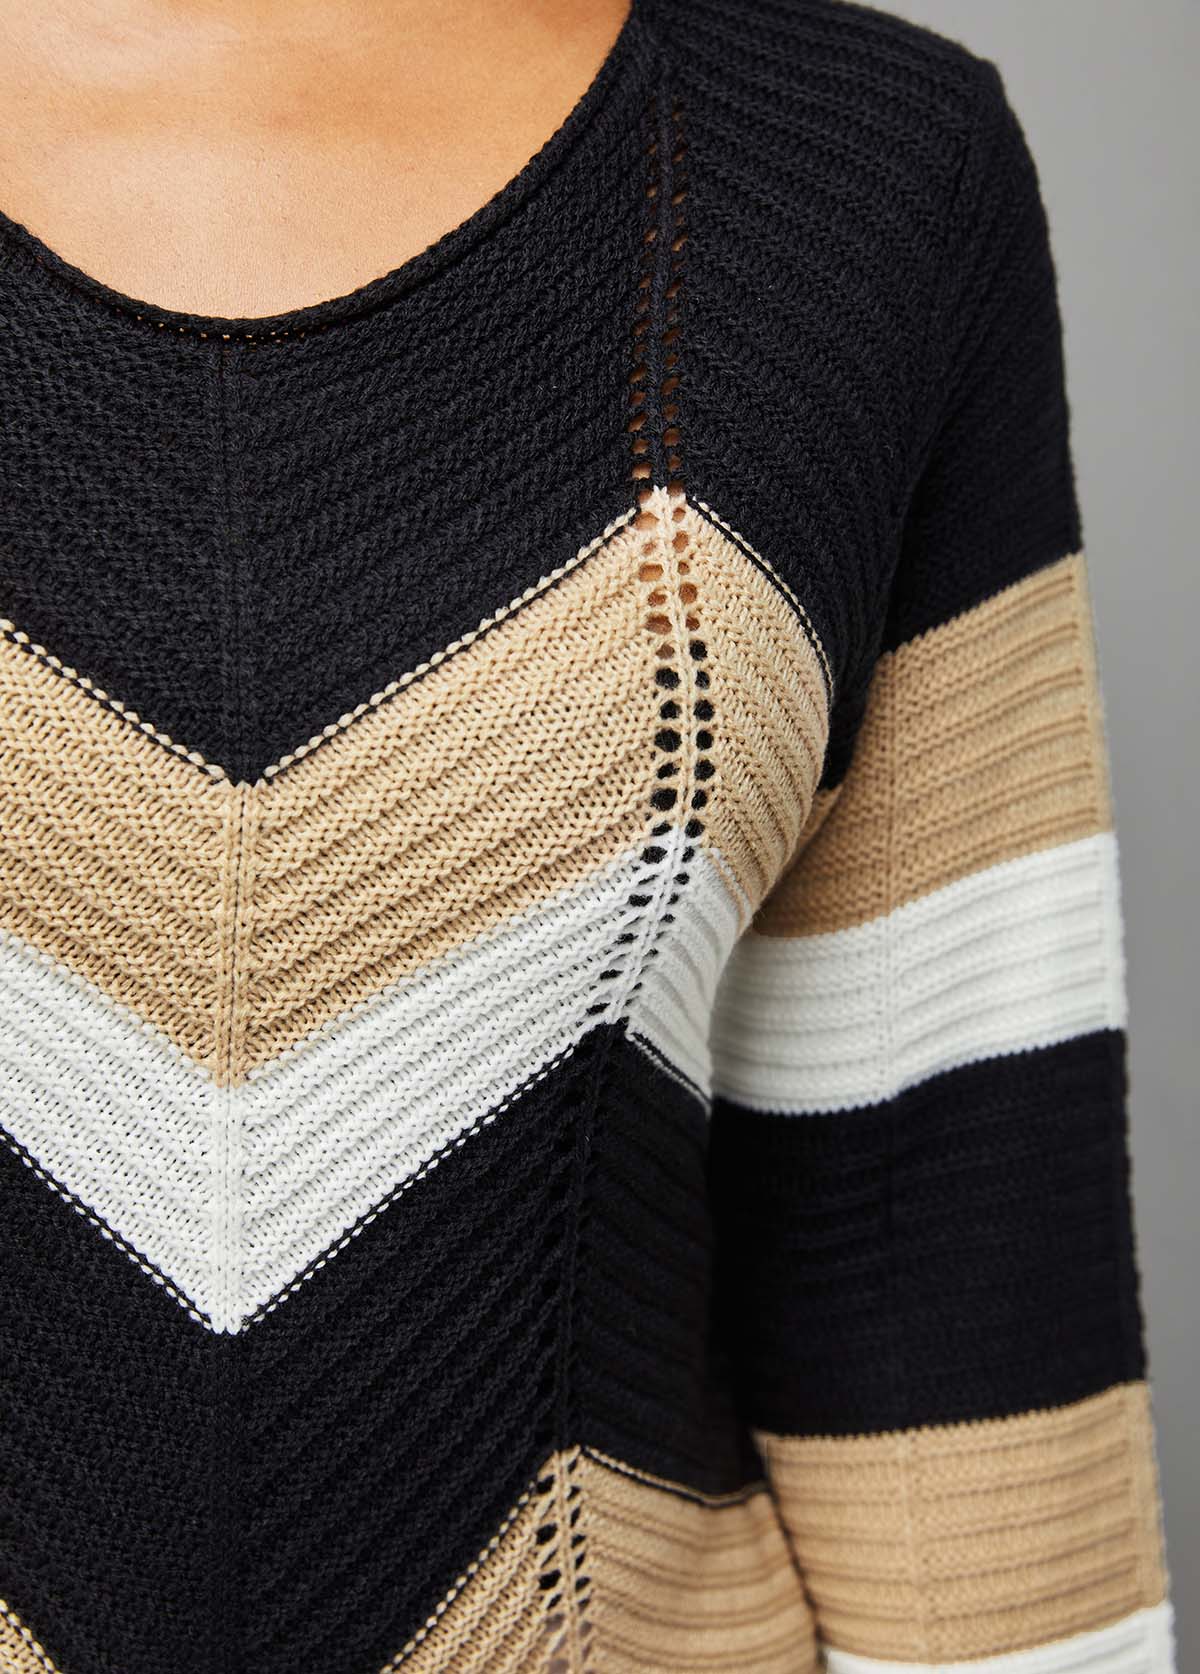 Chevron Print Long Sleeve Round Neck Sweater